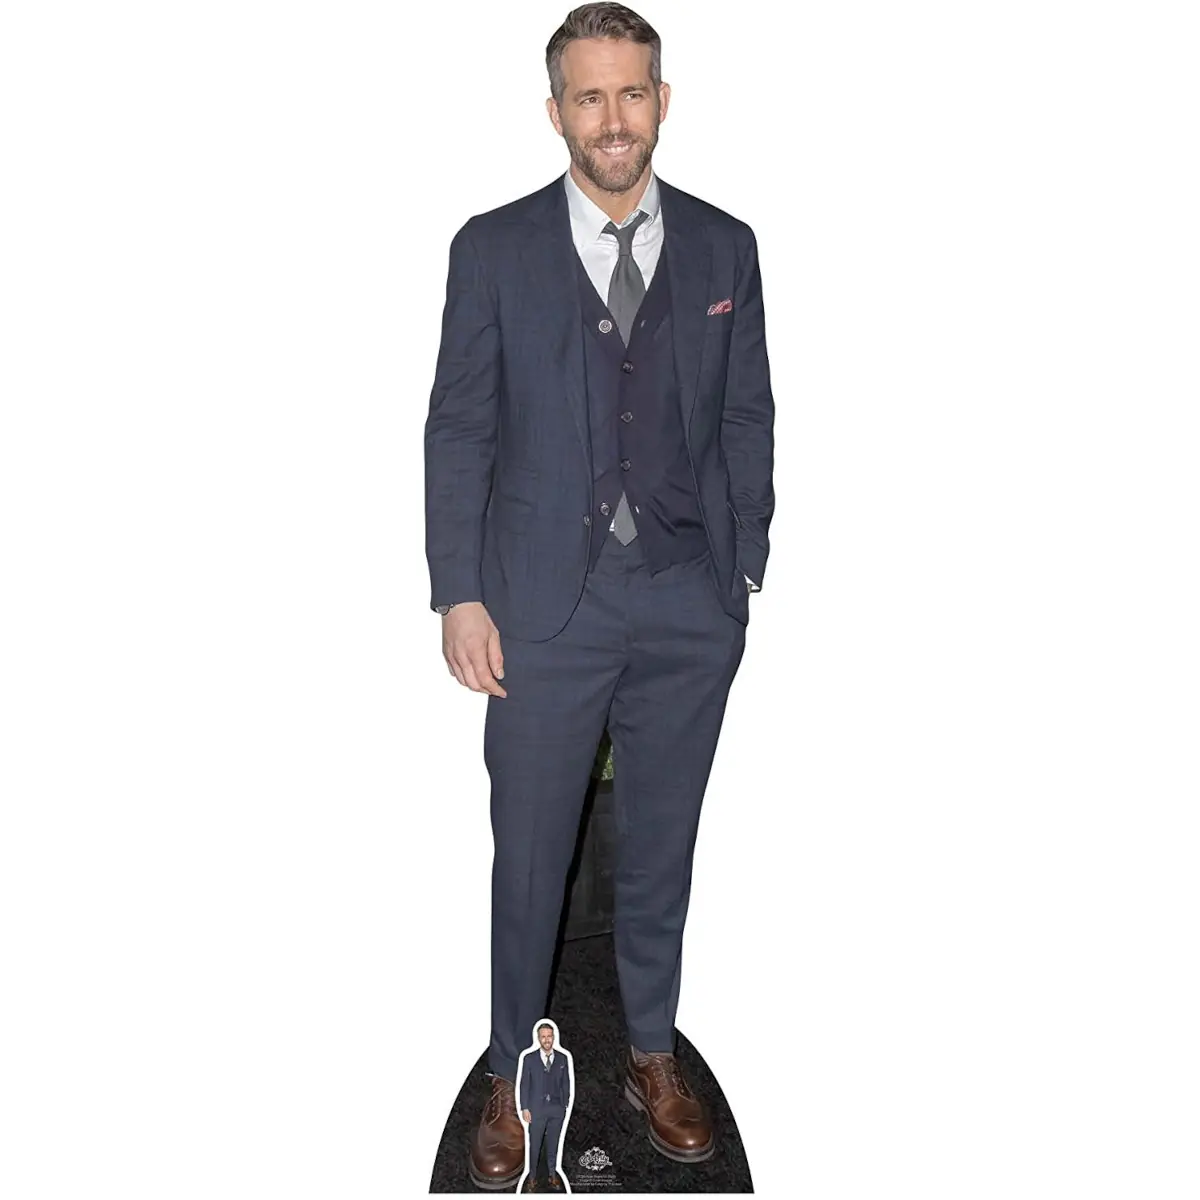 CS704 Ryan Reynolds Smart Suit Canadian American Actor Lifesize Mini Cardboard Cutout